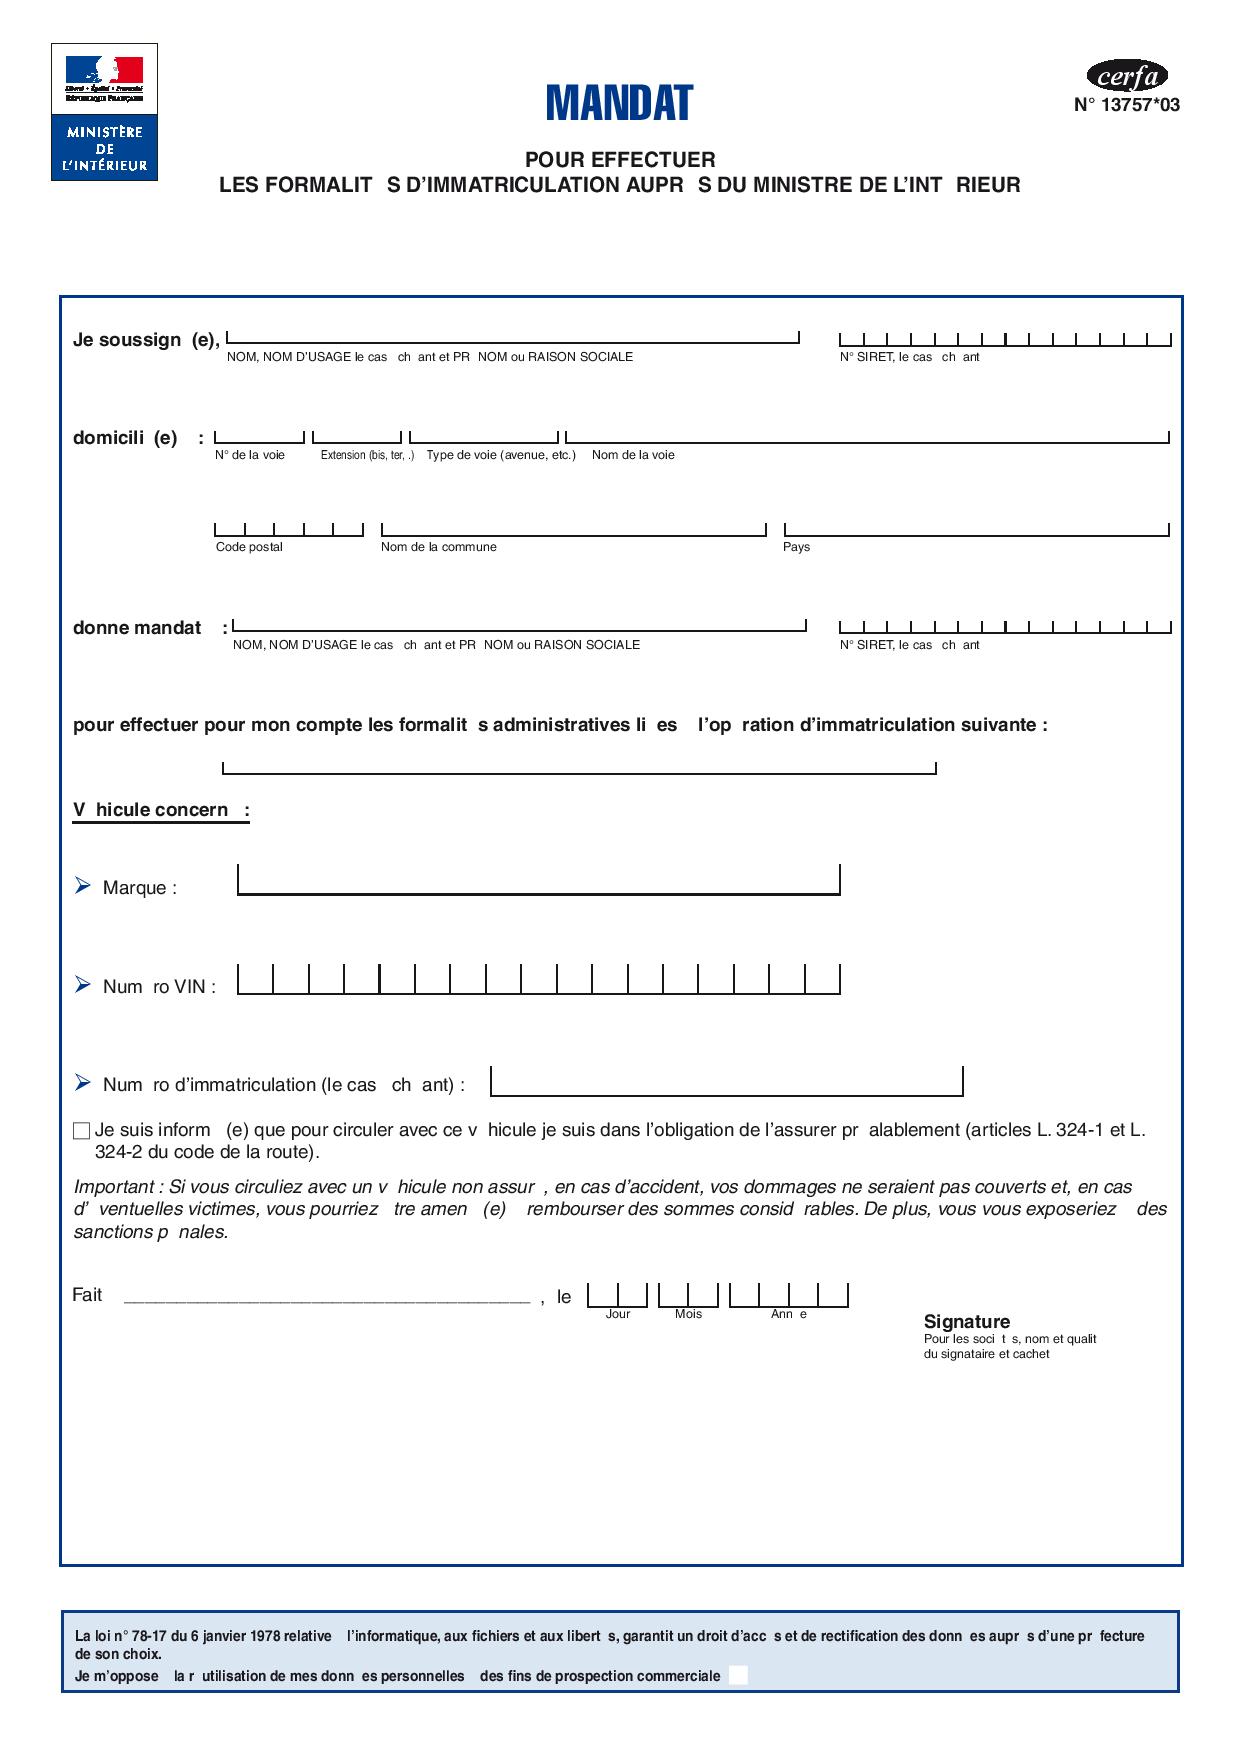 job resume outline online english tutor resume sample manager resume sample doc banking resume